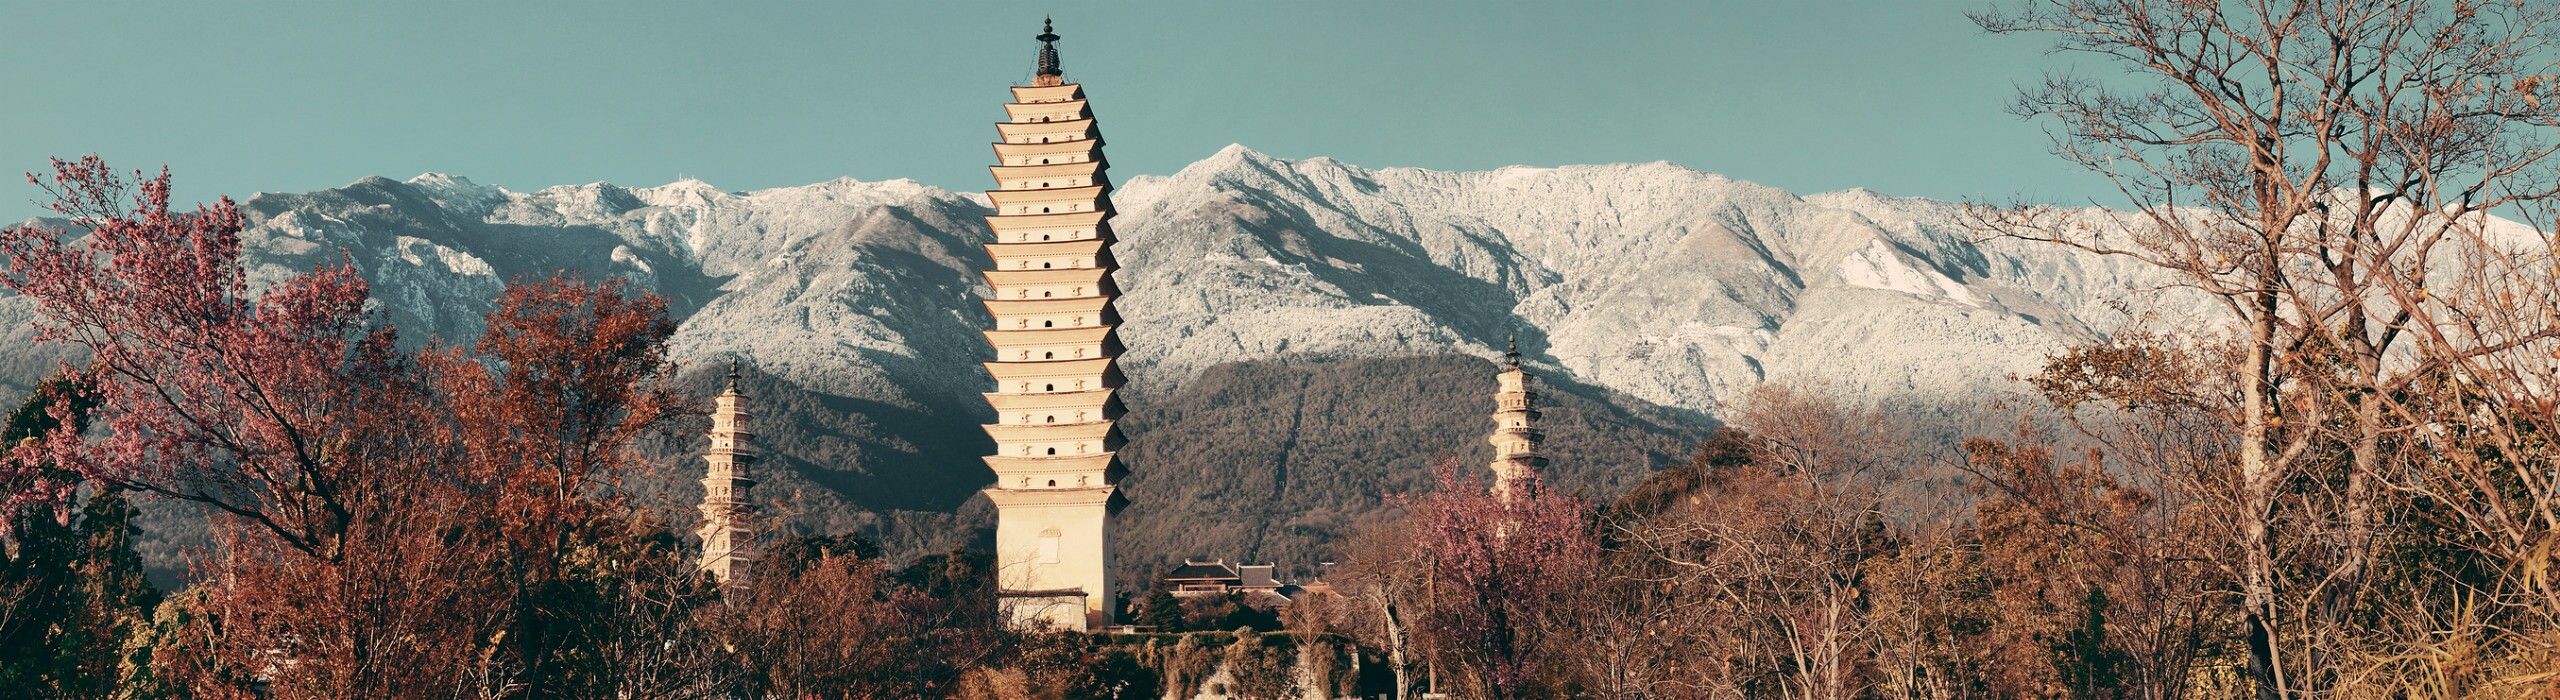 7-Day Kunming, Dali, and Lijiang Winter Tour